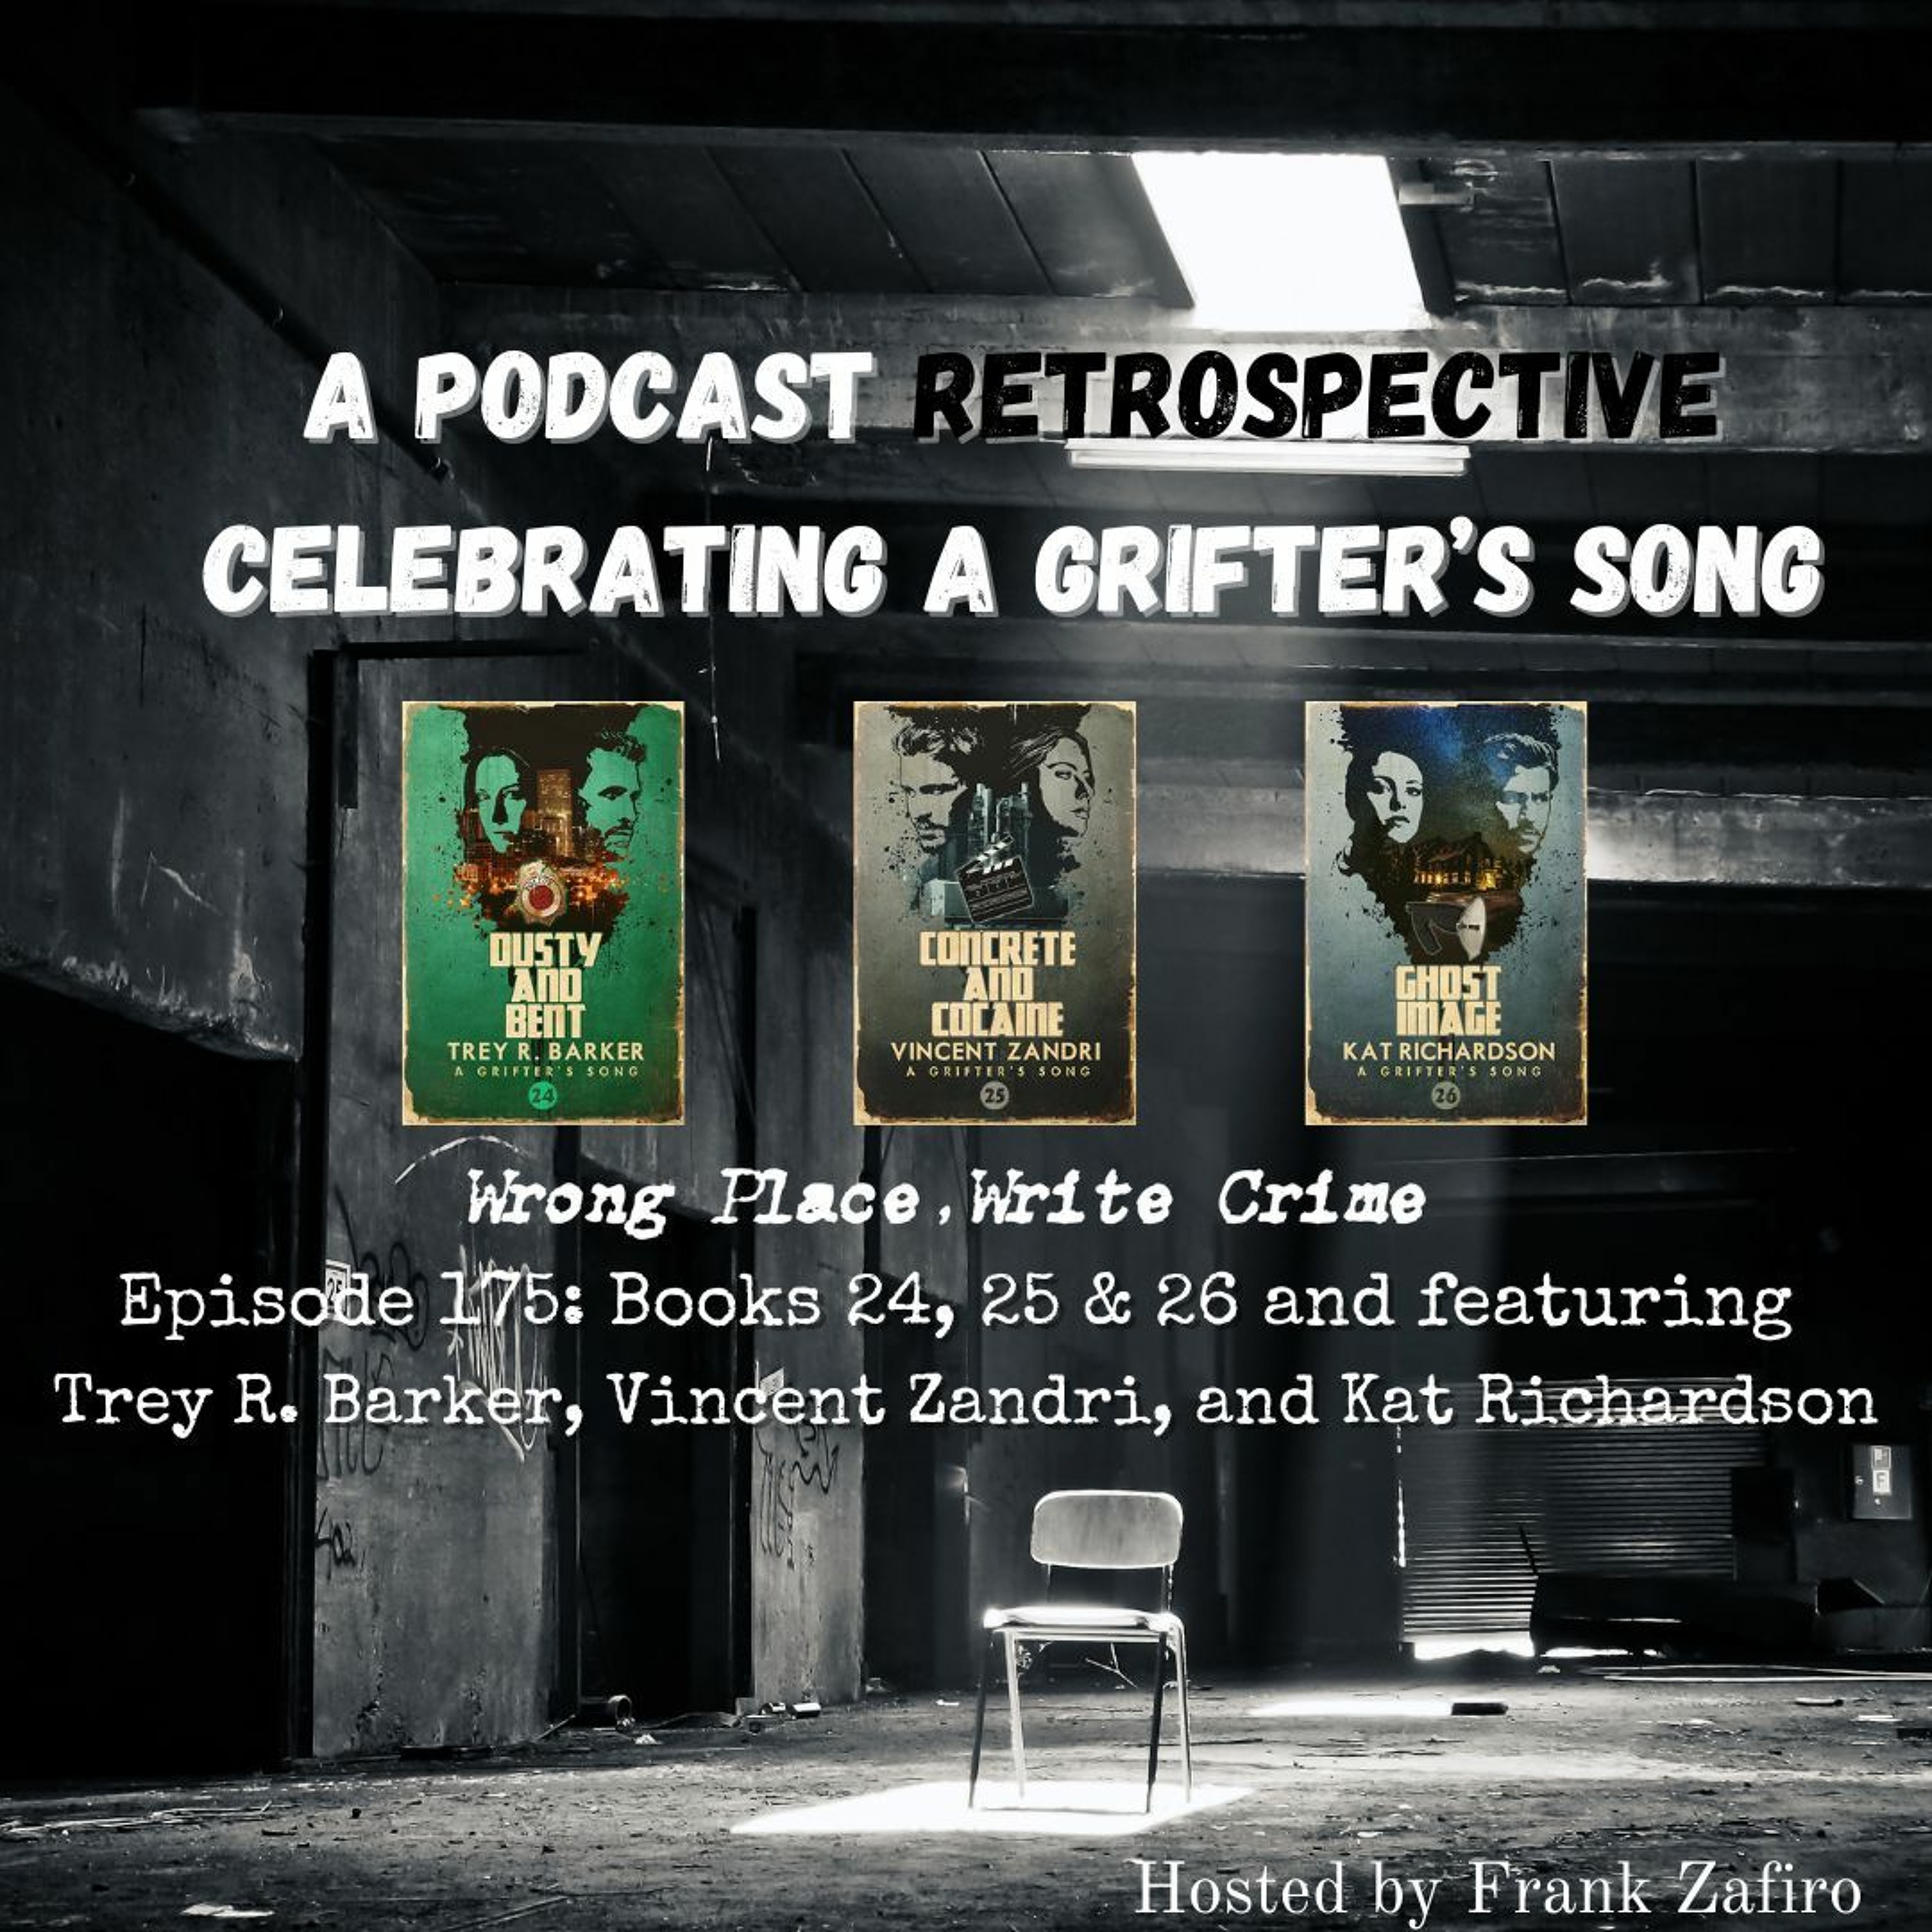 Episode 175: A Grifter's Song Retropective #9 - Books 24, 25 & 26